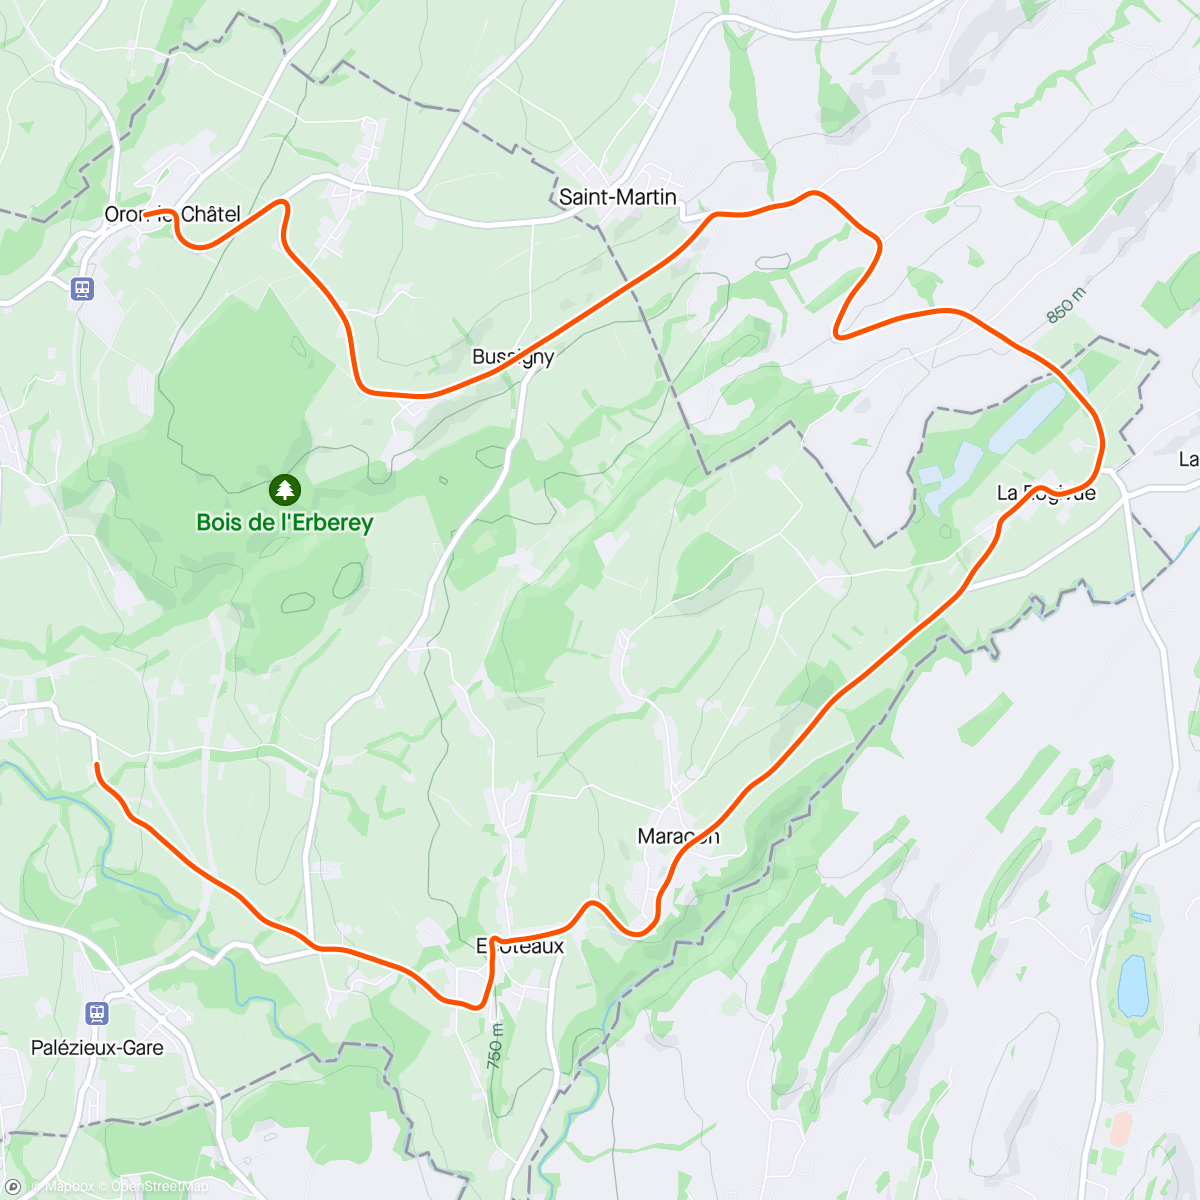 Carte de l'activité Giro pomeridiano